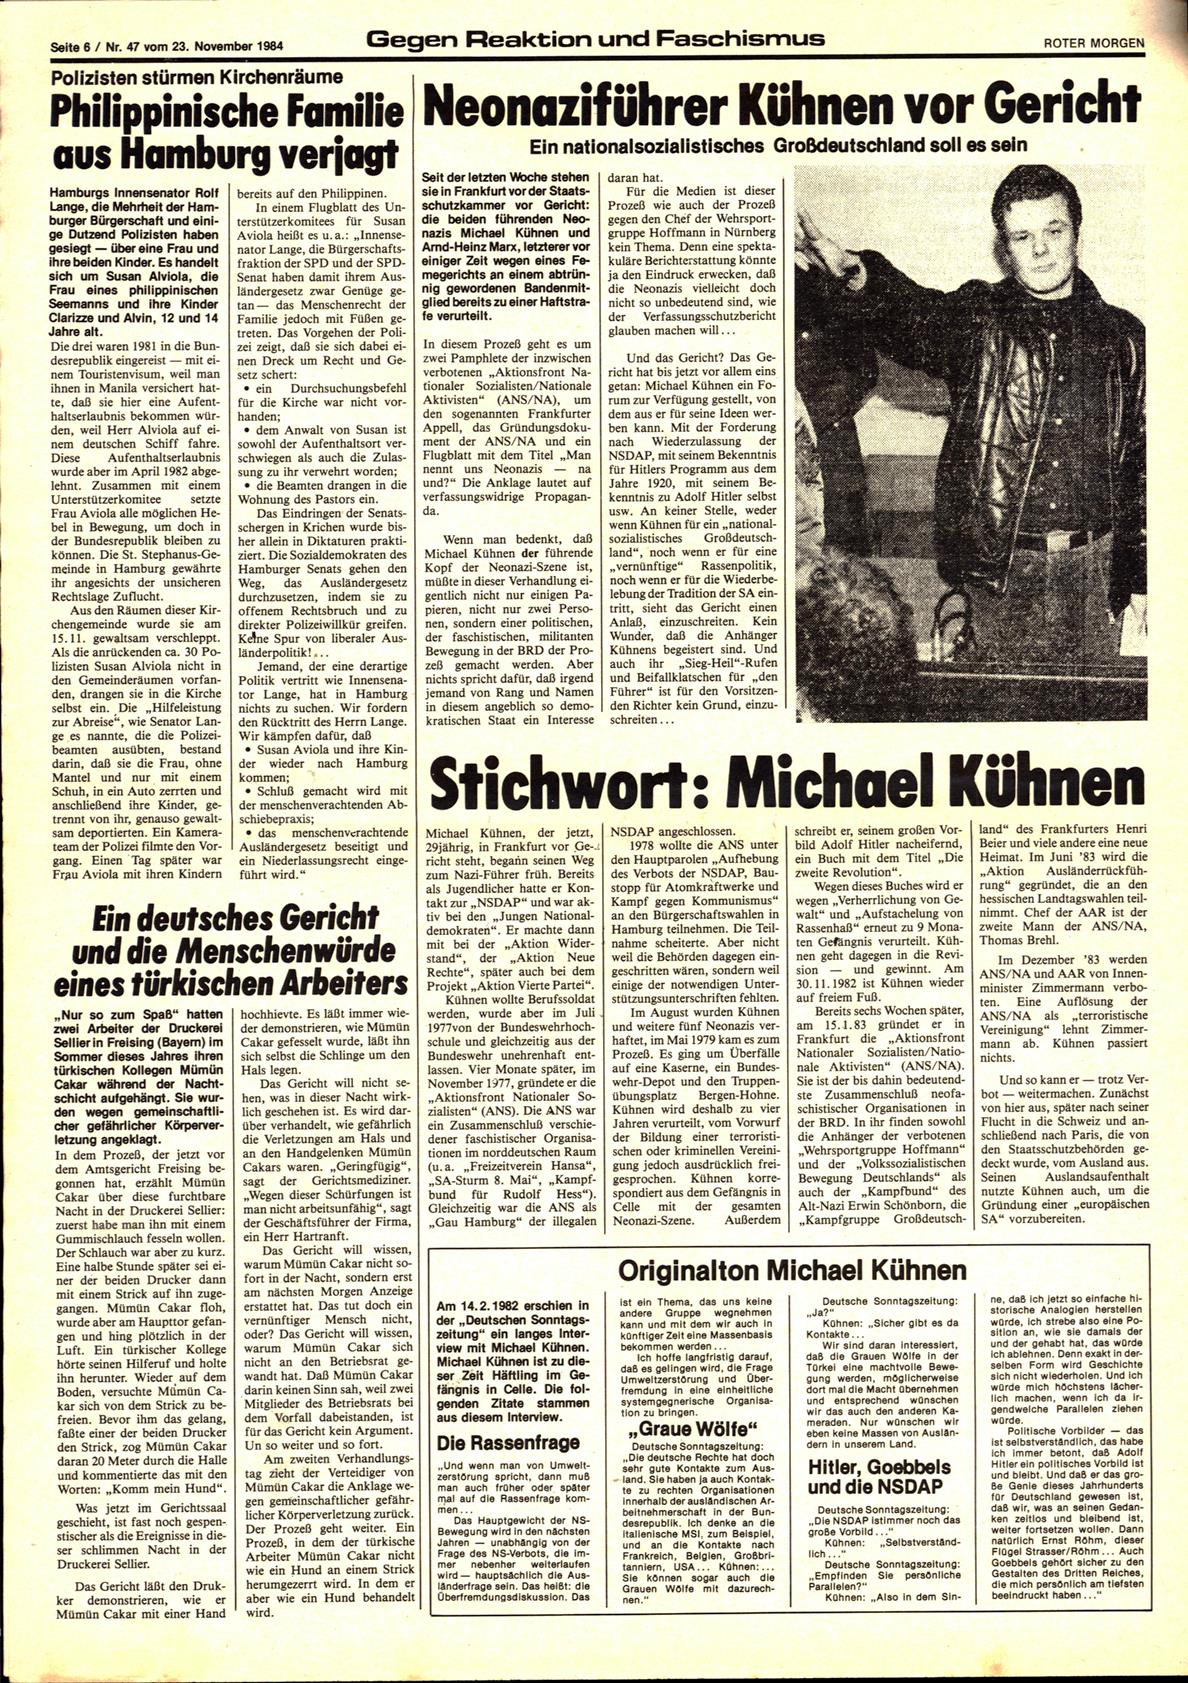 Roter Morgen, 18. Jg., 23. November 1984, Nr. 47, Seite 6